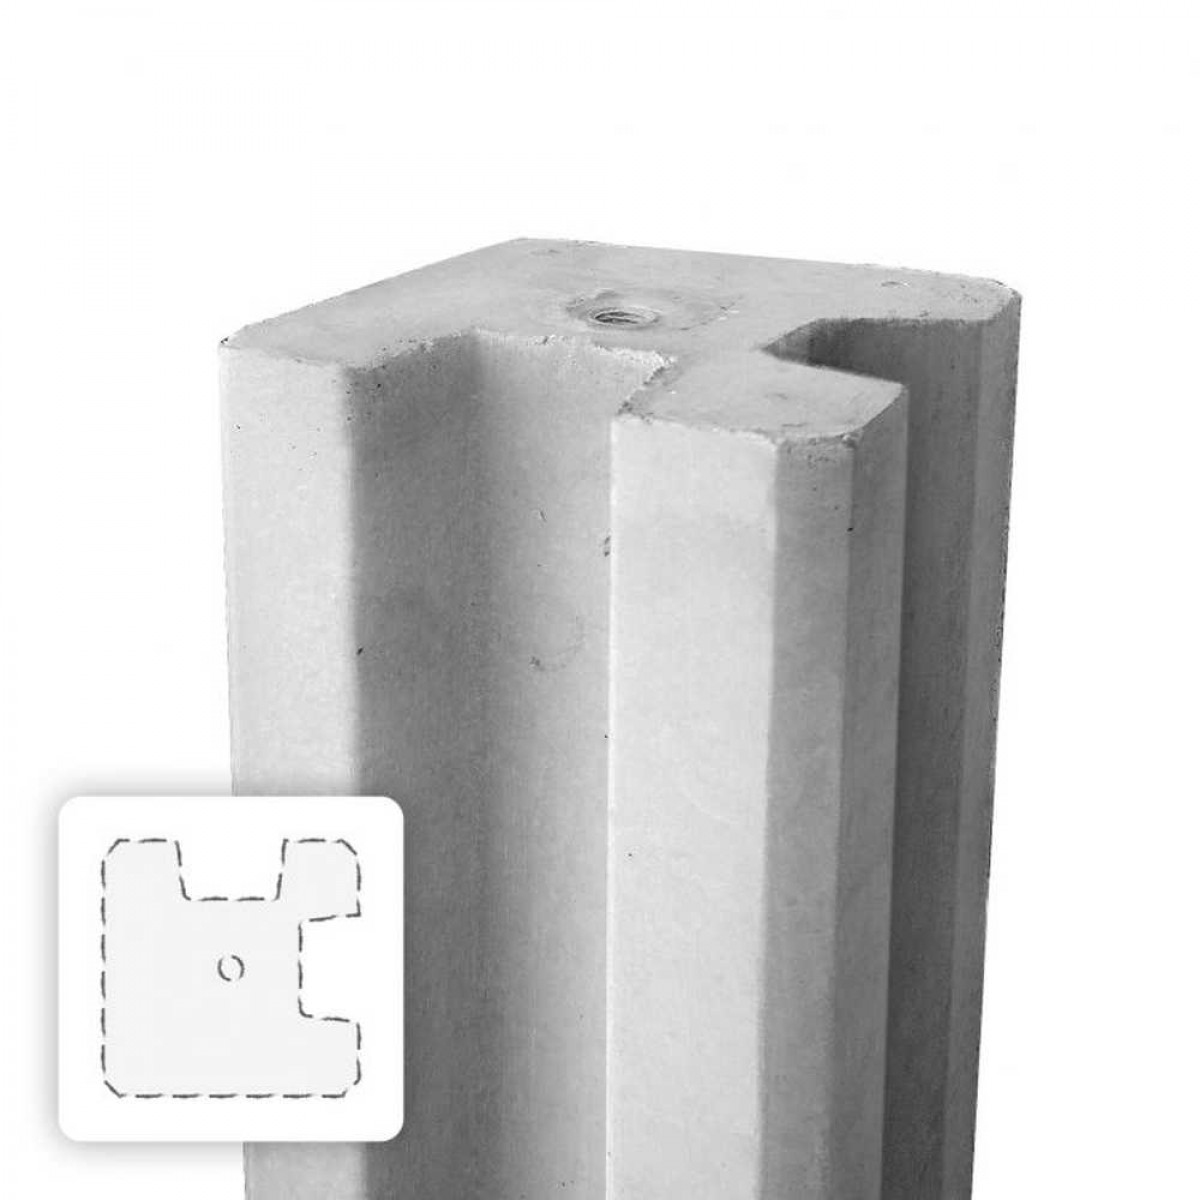 Hoekpaal beton 40 40 cm slag kopen